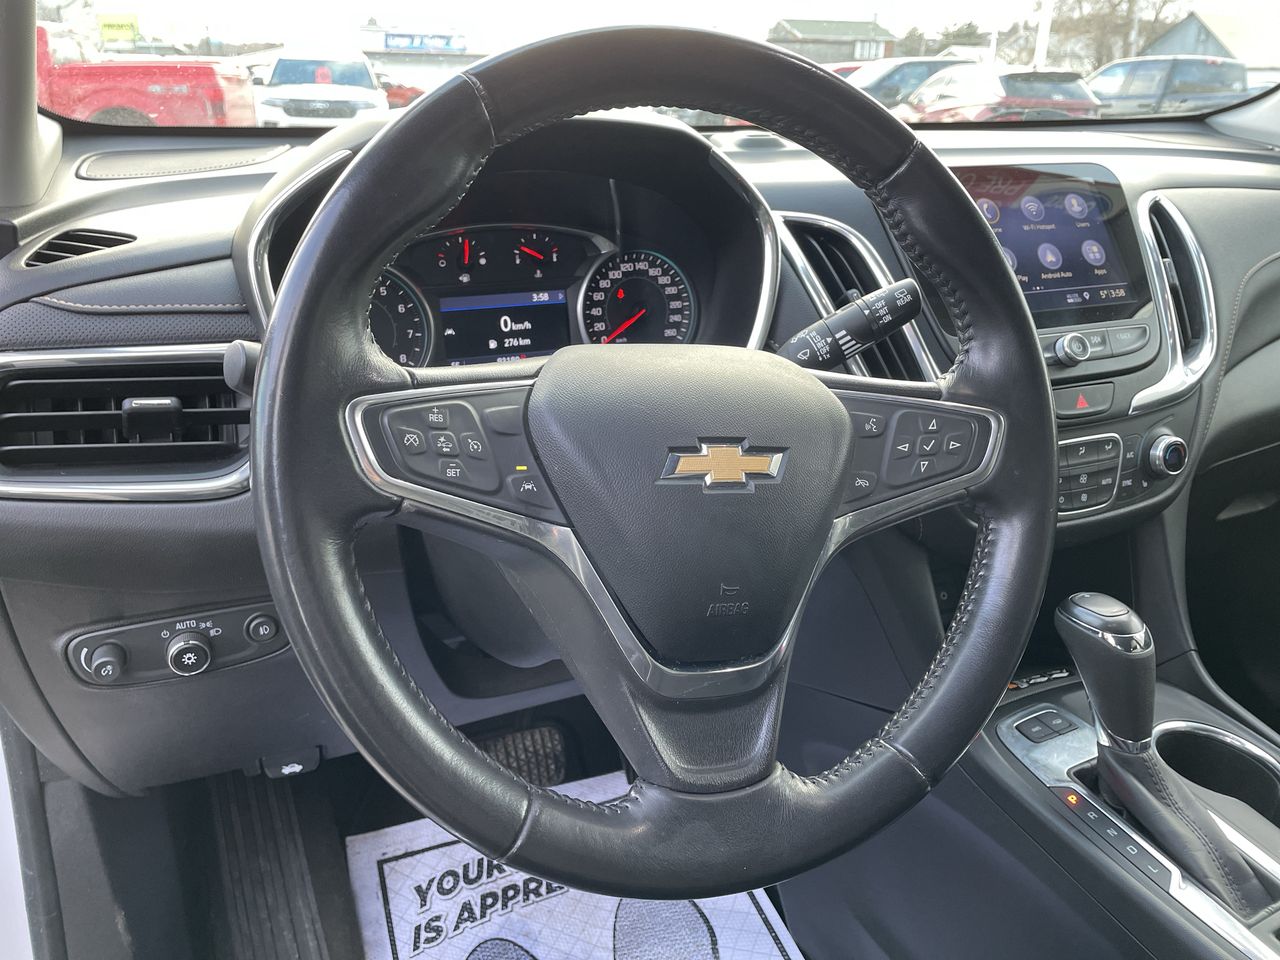 2020 Chevrolet Equinox - P21464 Full Image 14